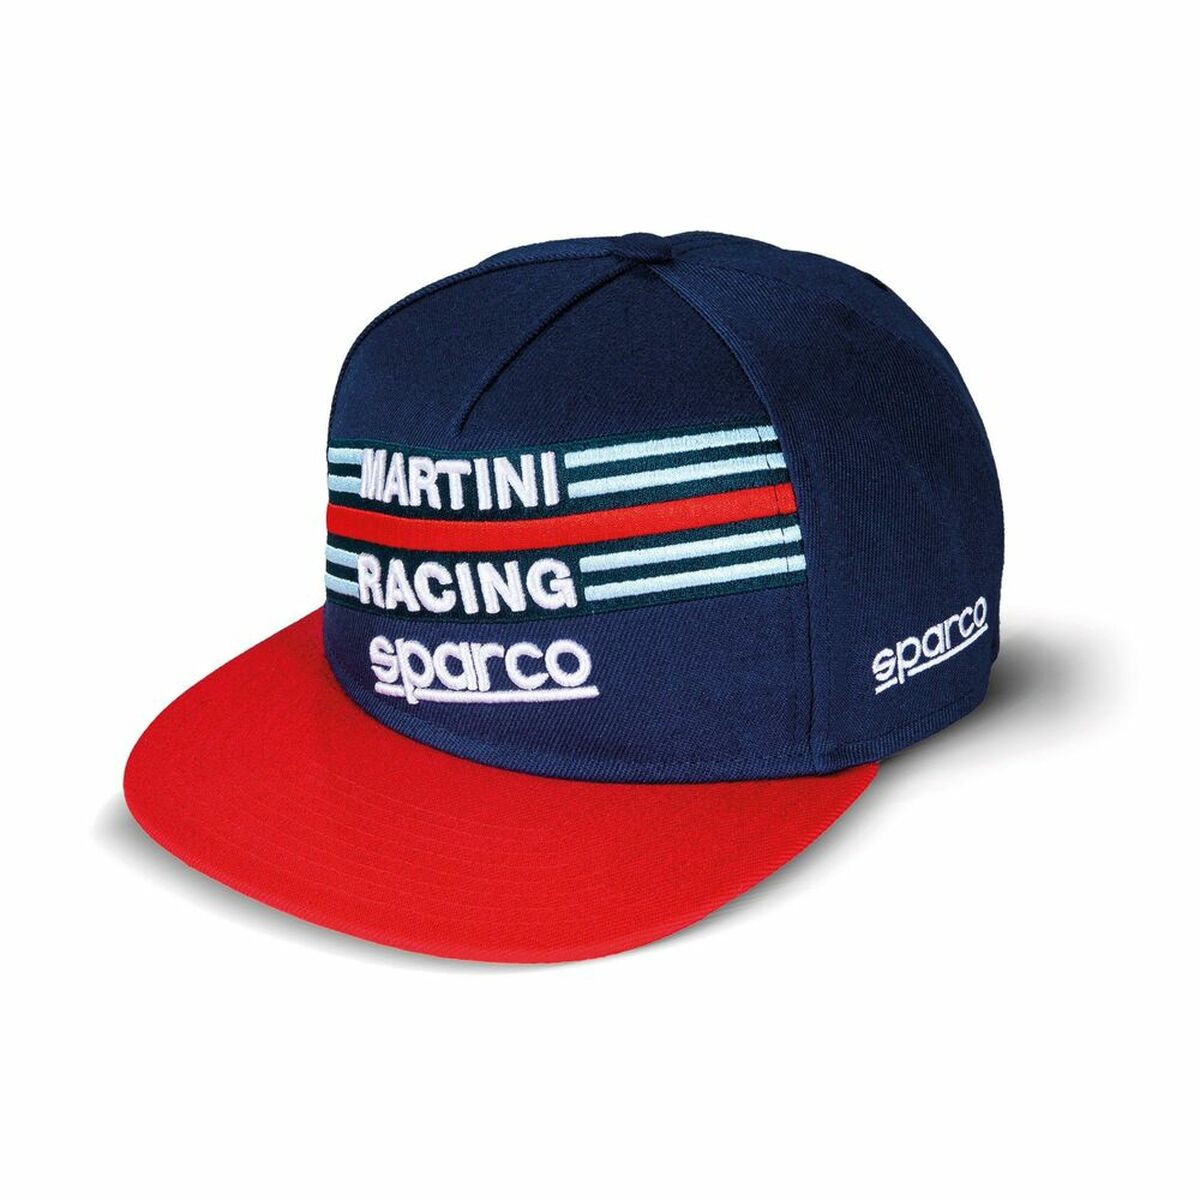 Kappe Sparco Martini Racing Blau Rot